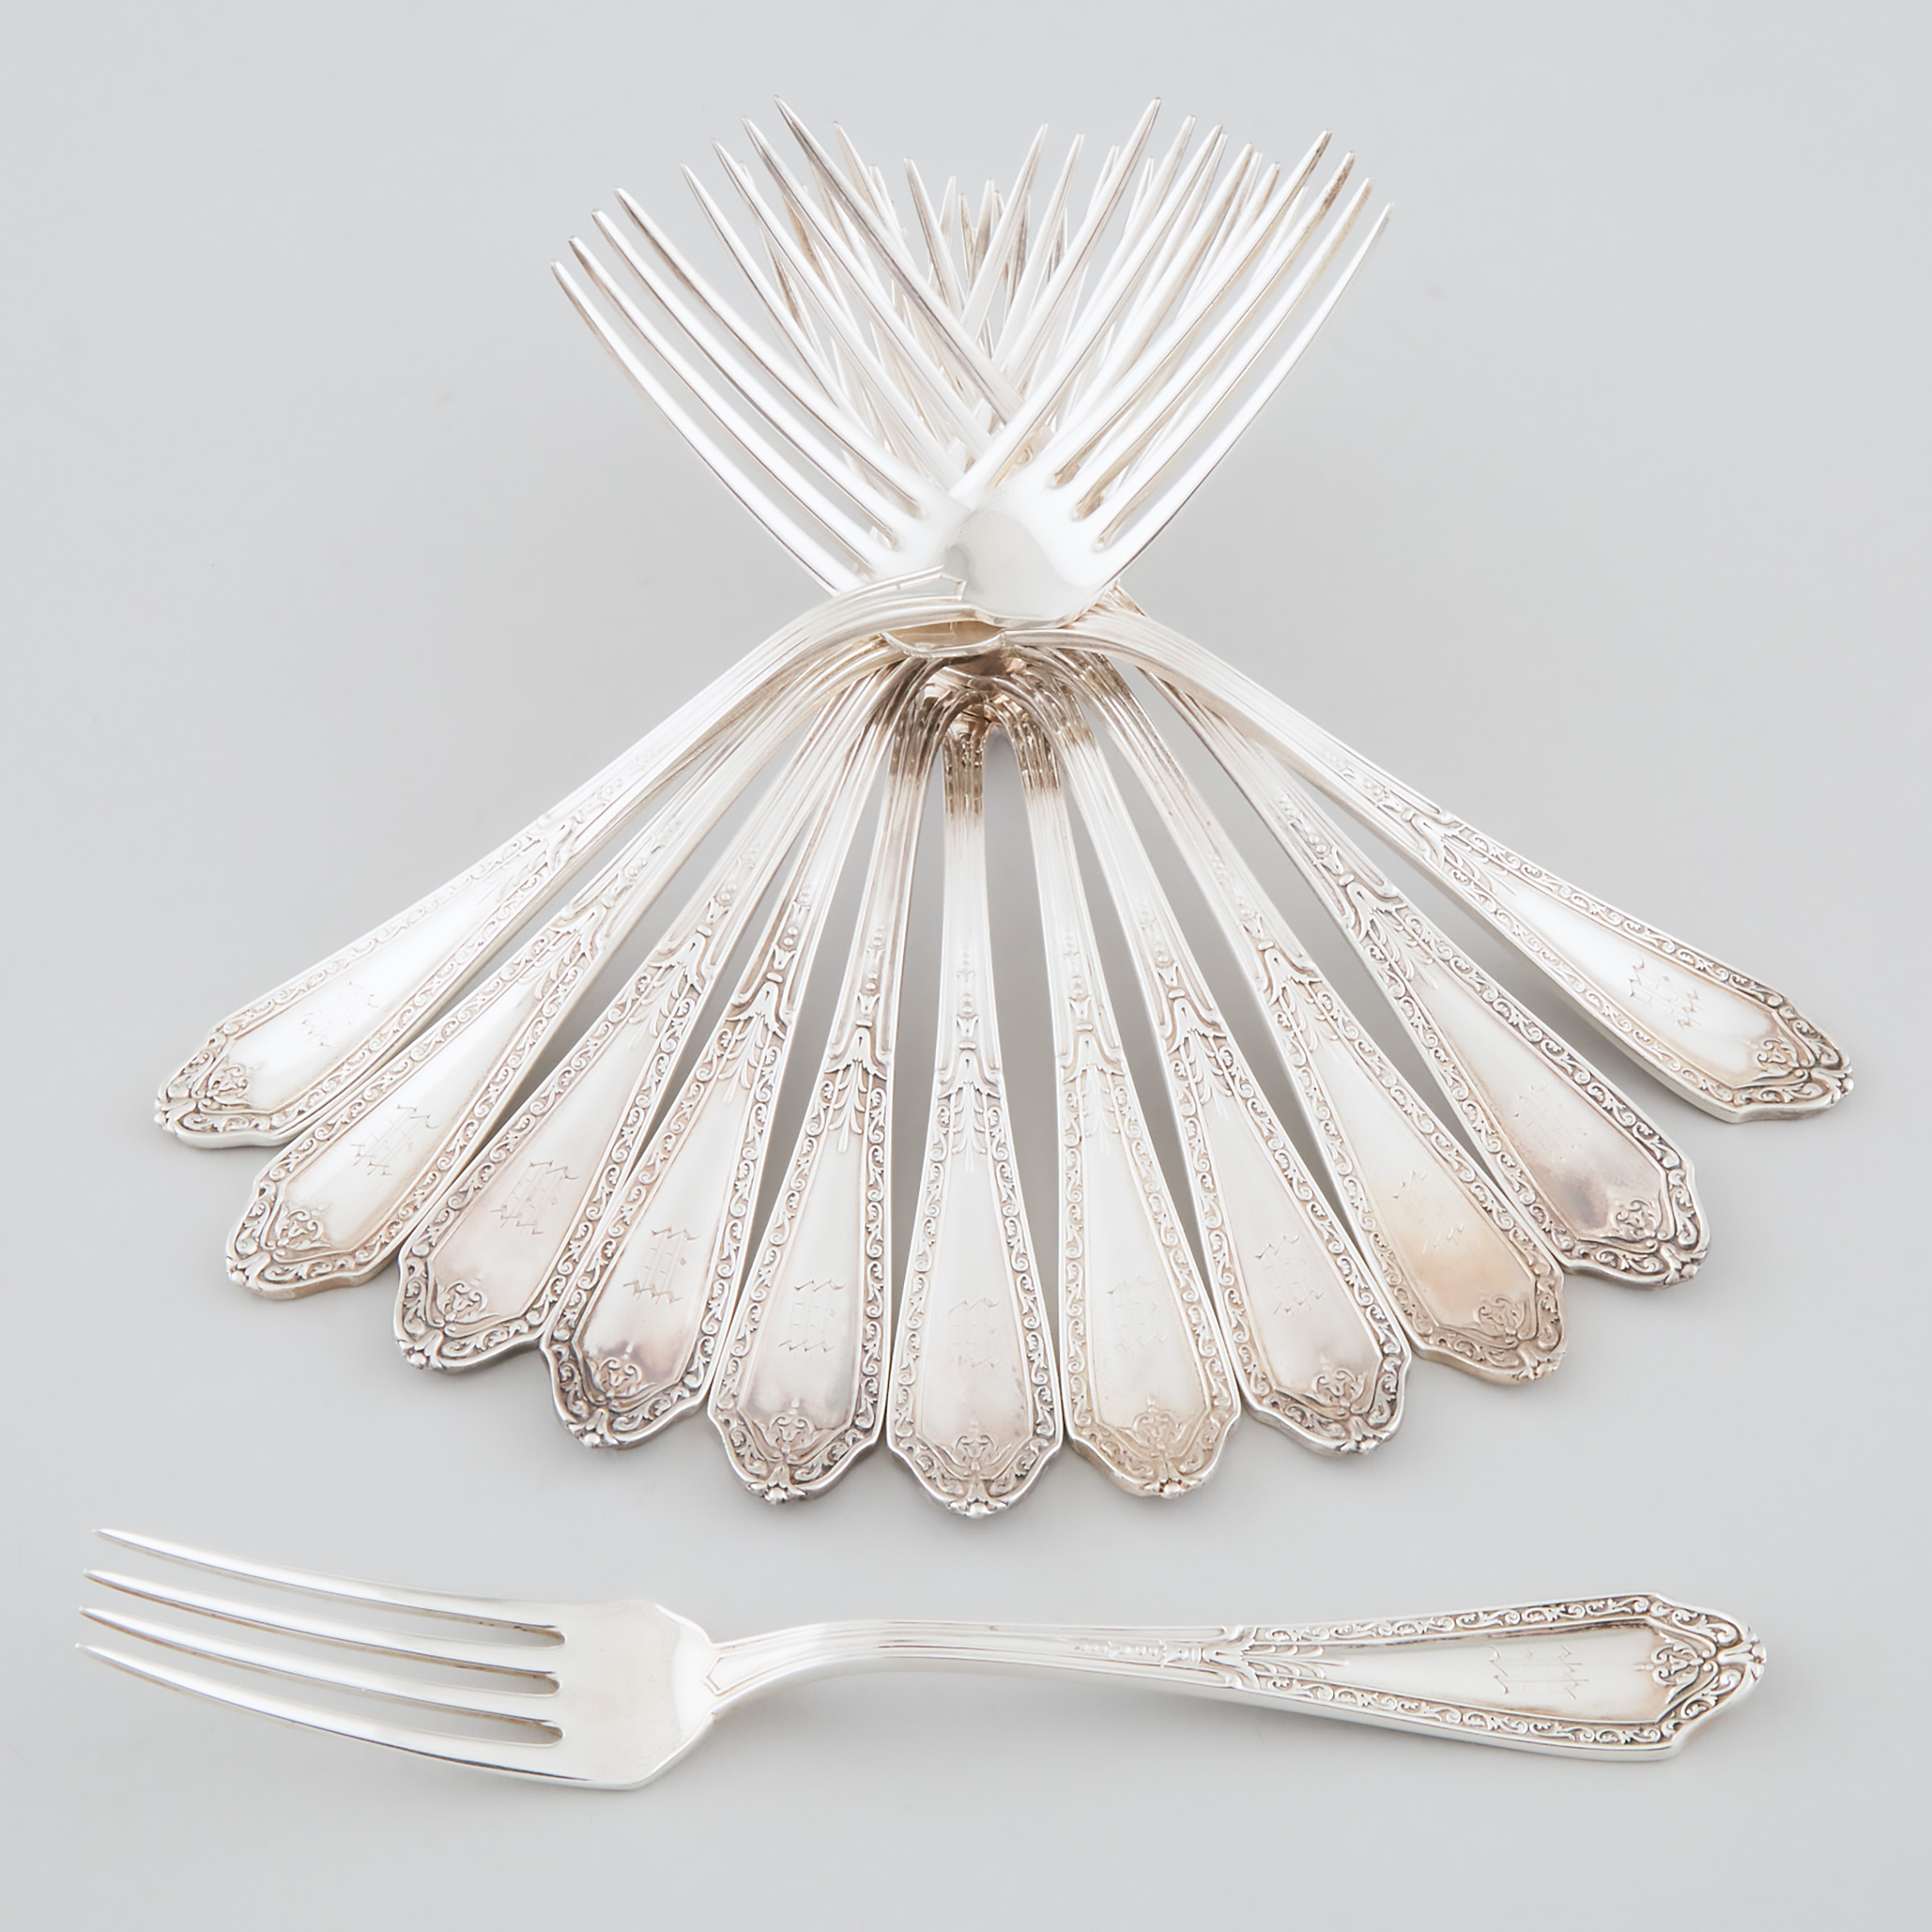 Twelve Canadian Silver Dinner Forks, Roden Bros., Toronto. Ont., 20th century